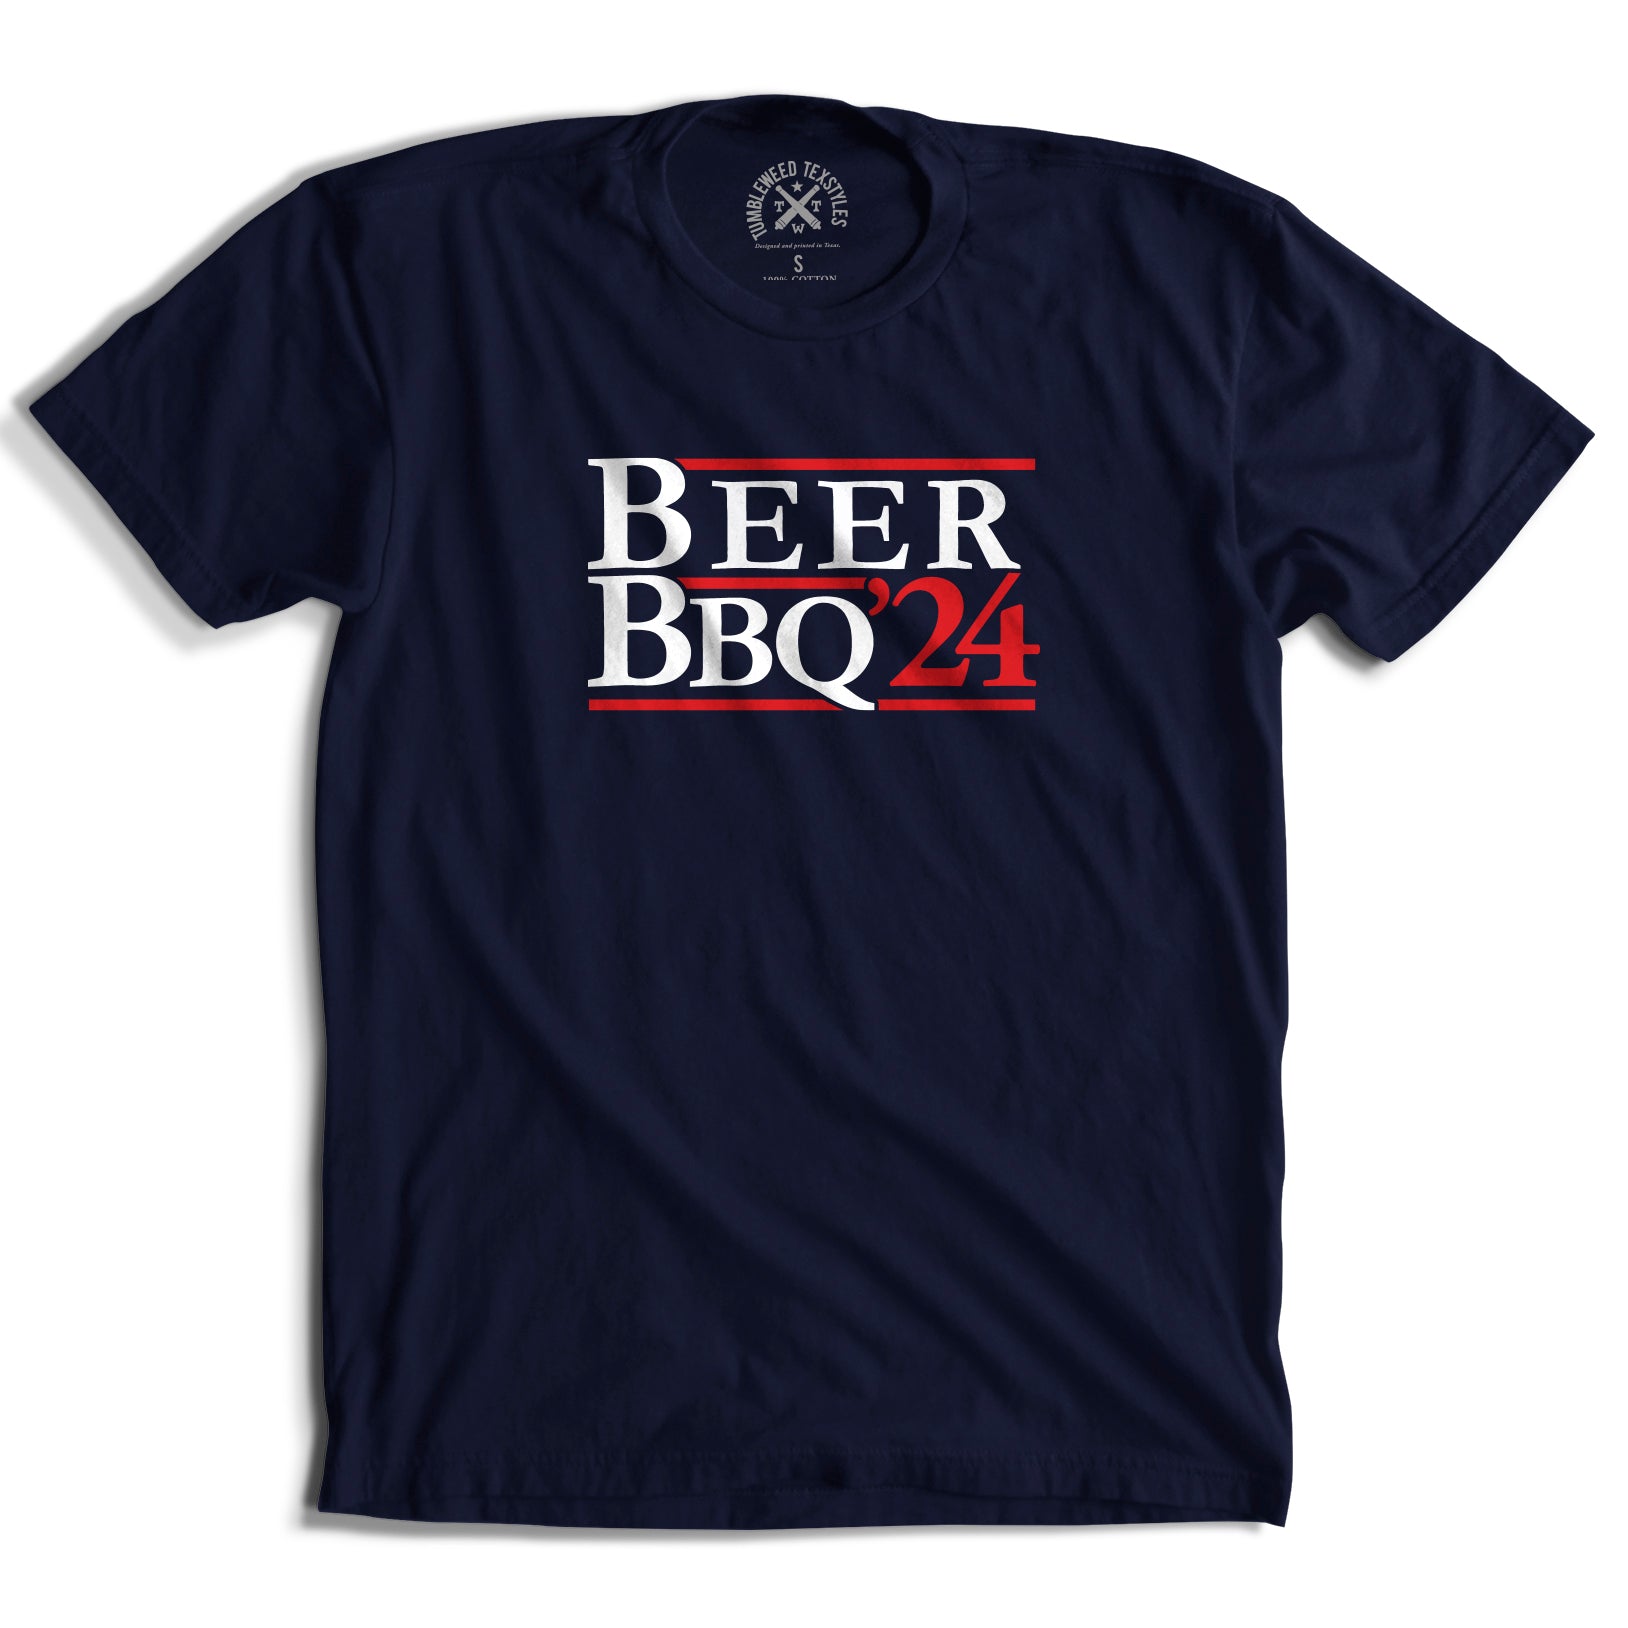 Beer BBQ '24 T-Shirt